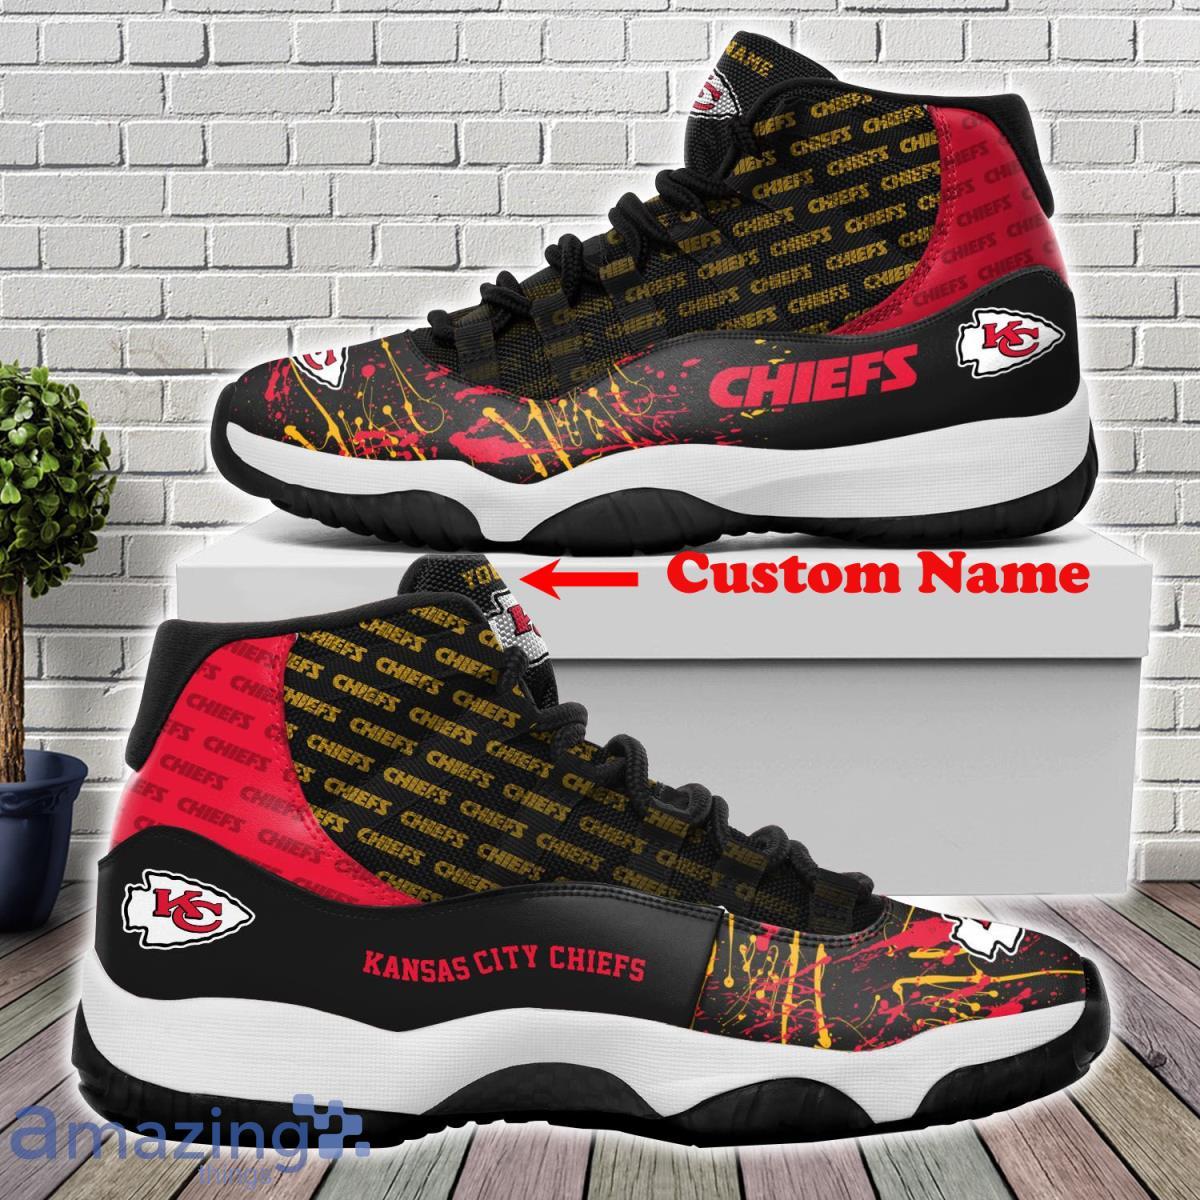 Kansas City Chiefs Football Team Air Jordan 11 Custom Name Sneakers For Fans Product Photo 1